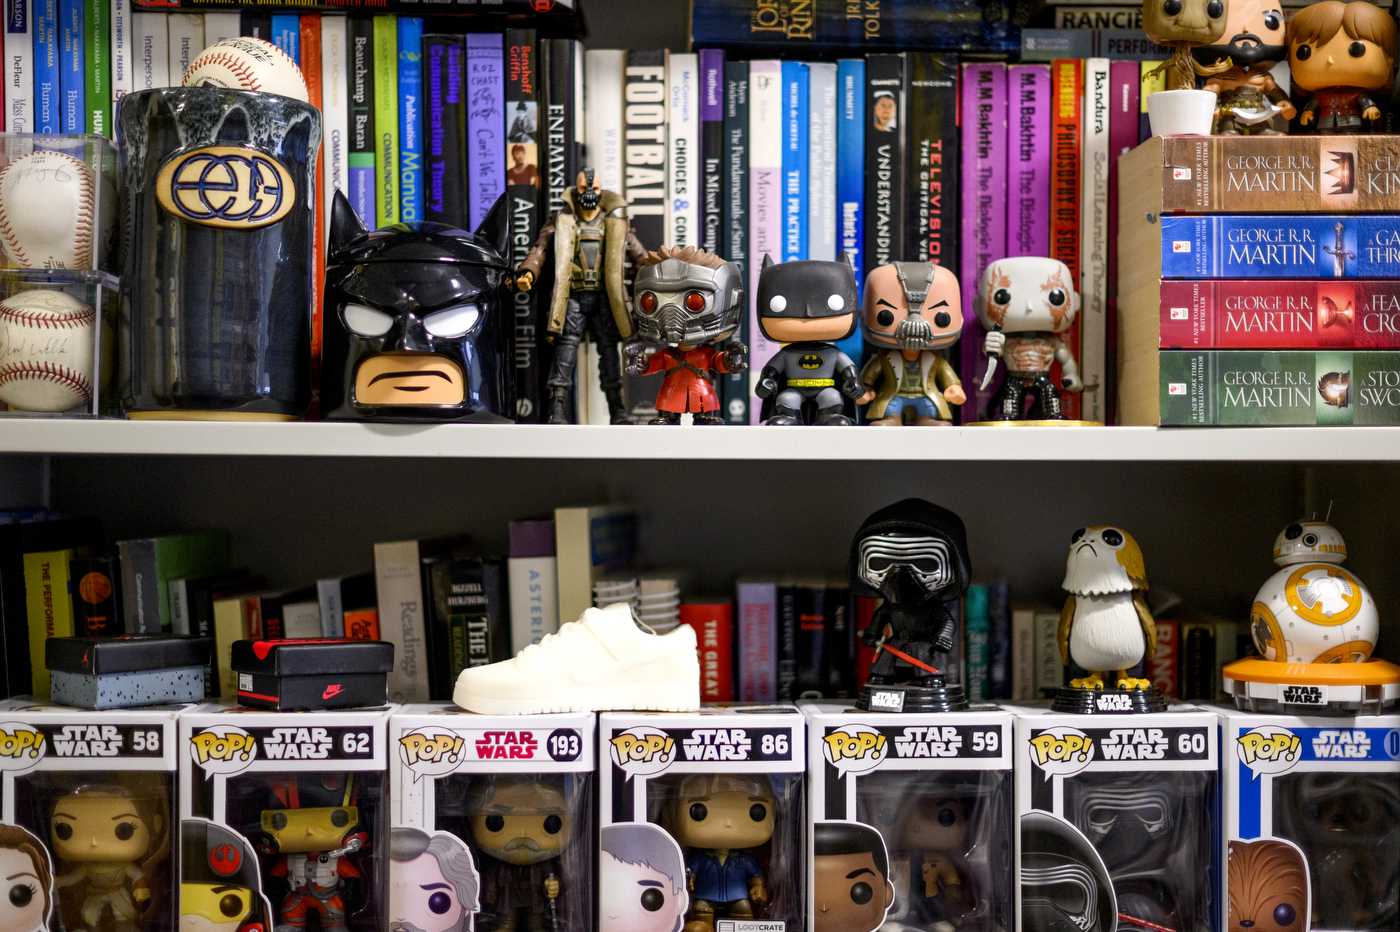 Superhero paraphernalia lines the shelves of a bookcase.